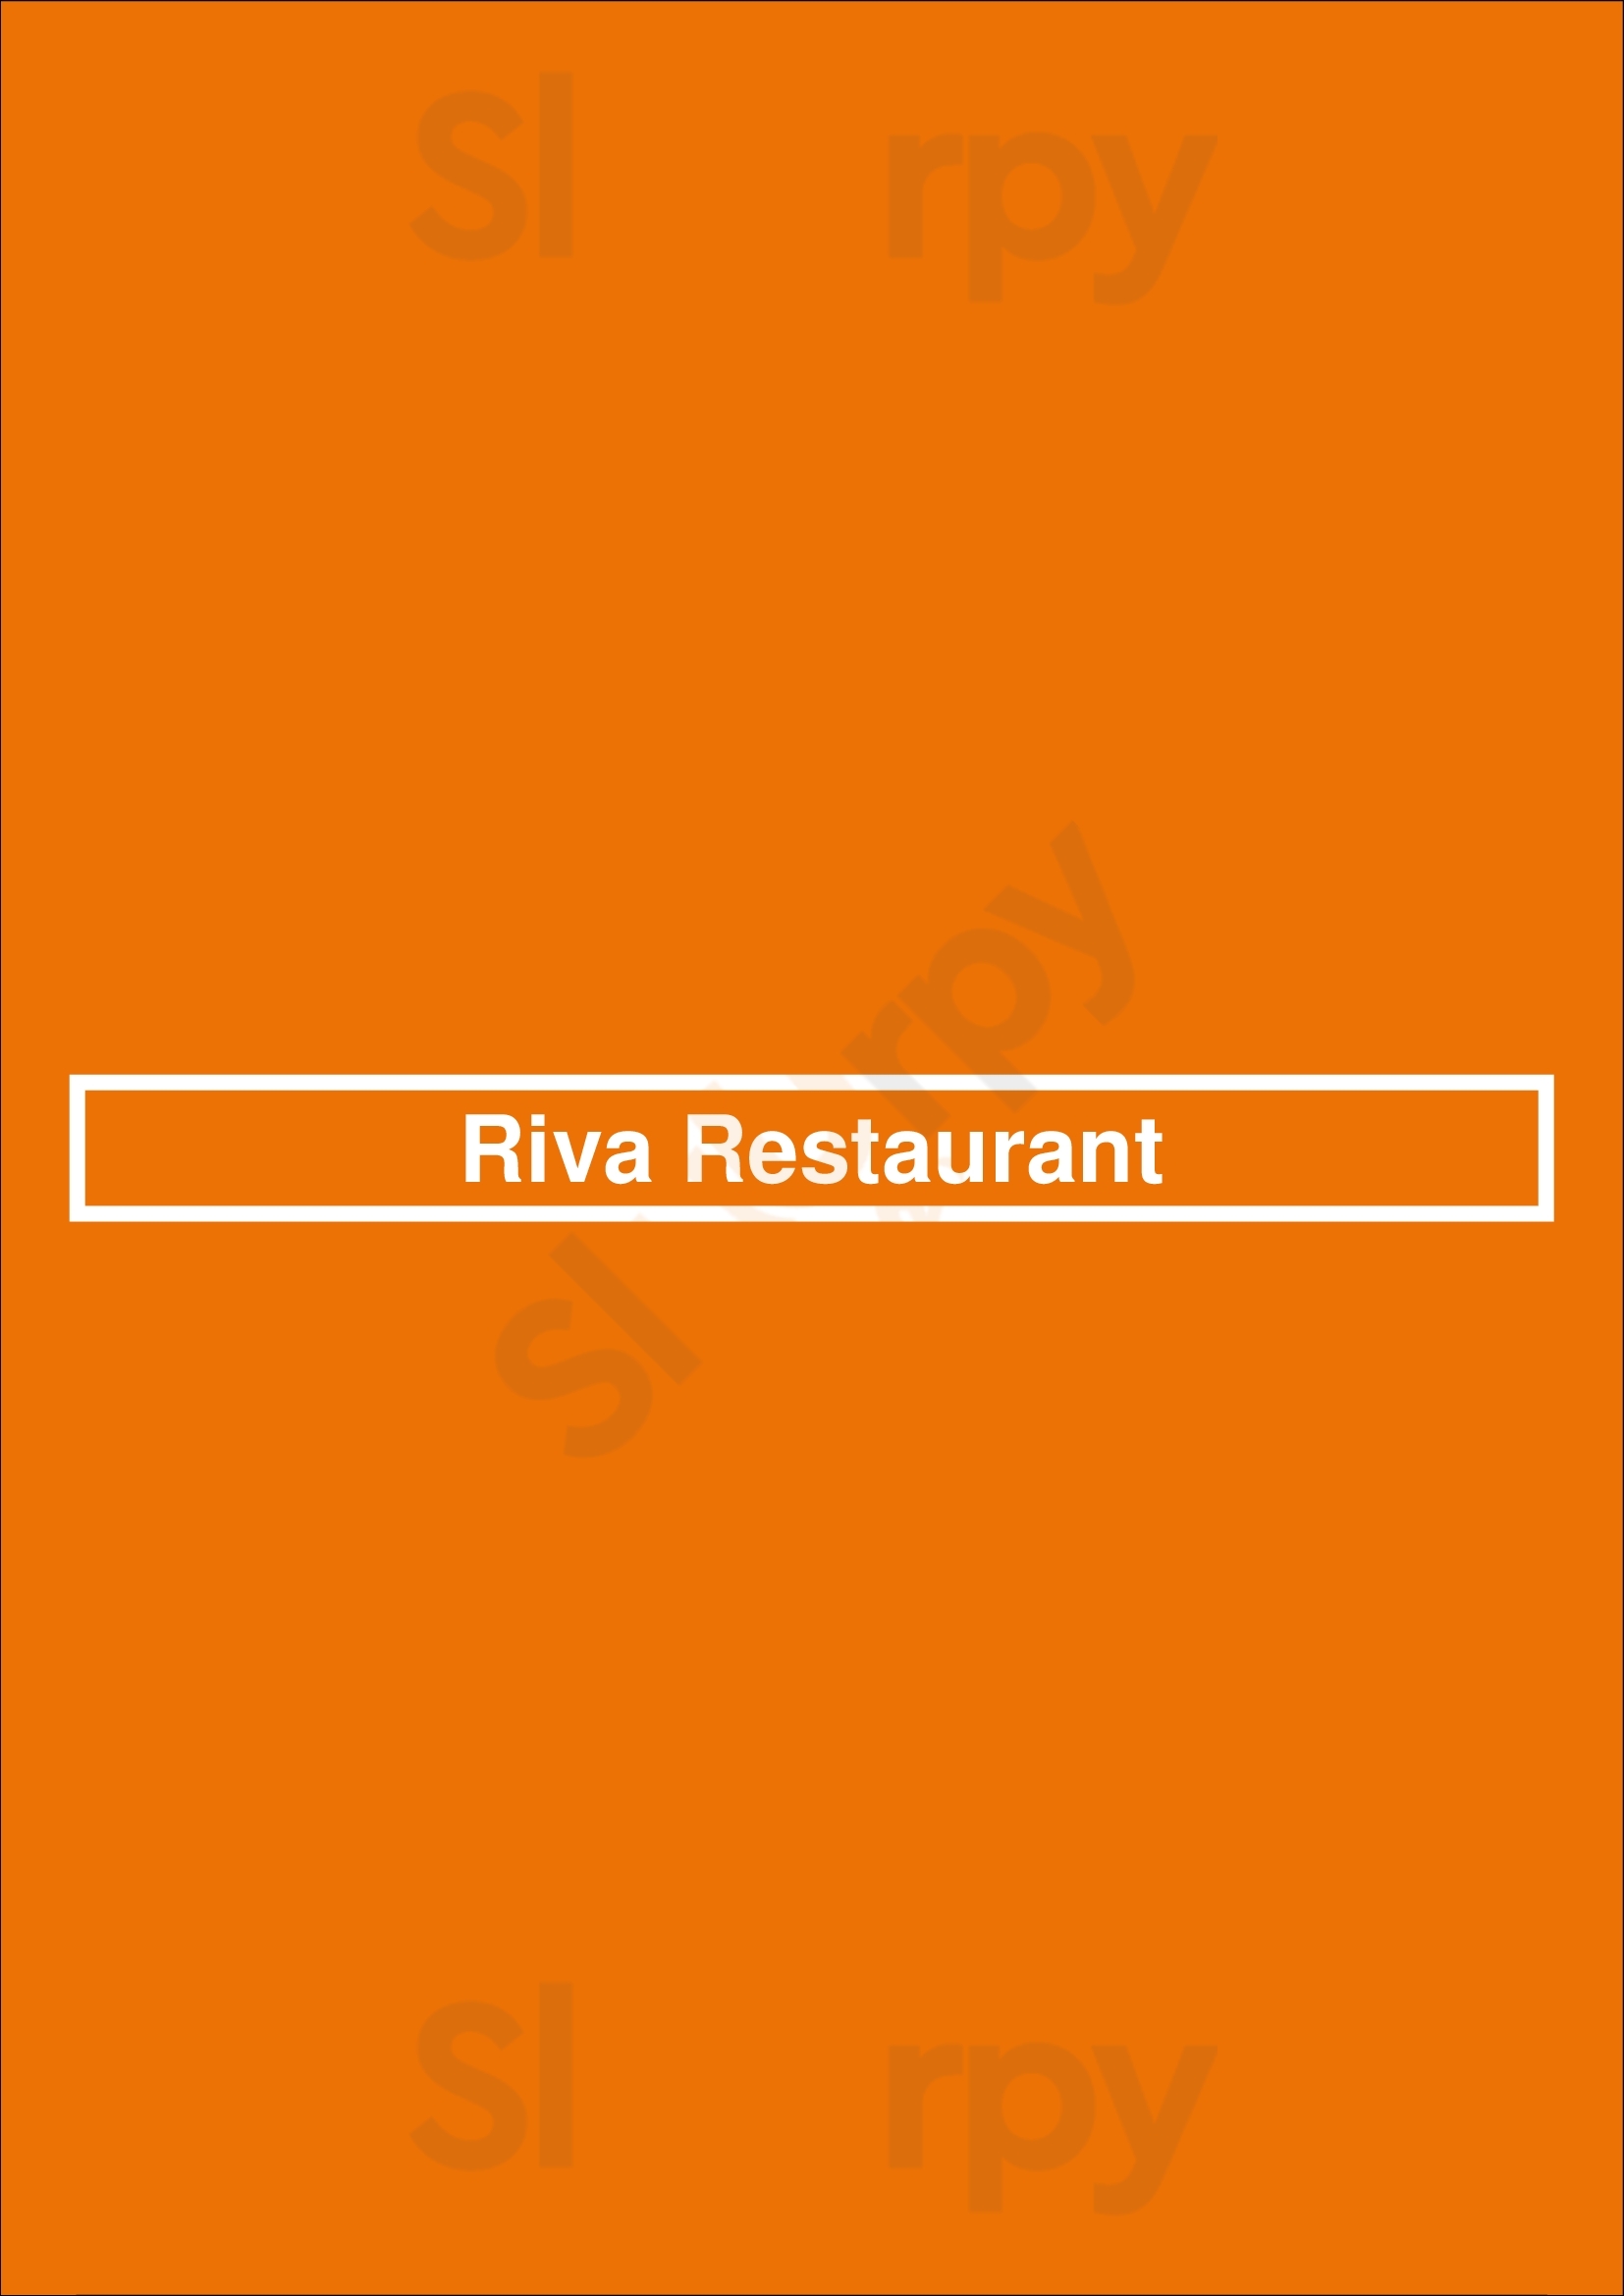 Riva Restaurant Chicago Menu - 1